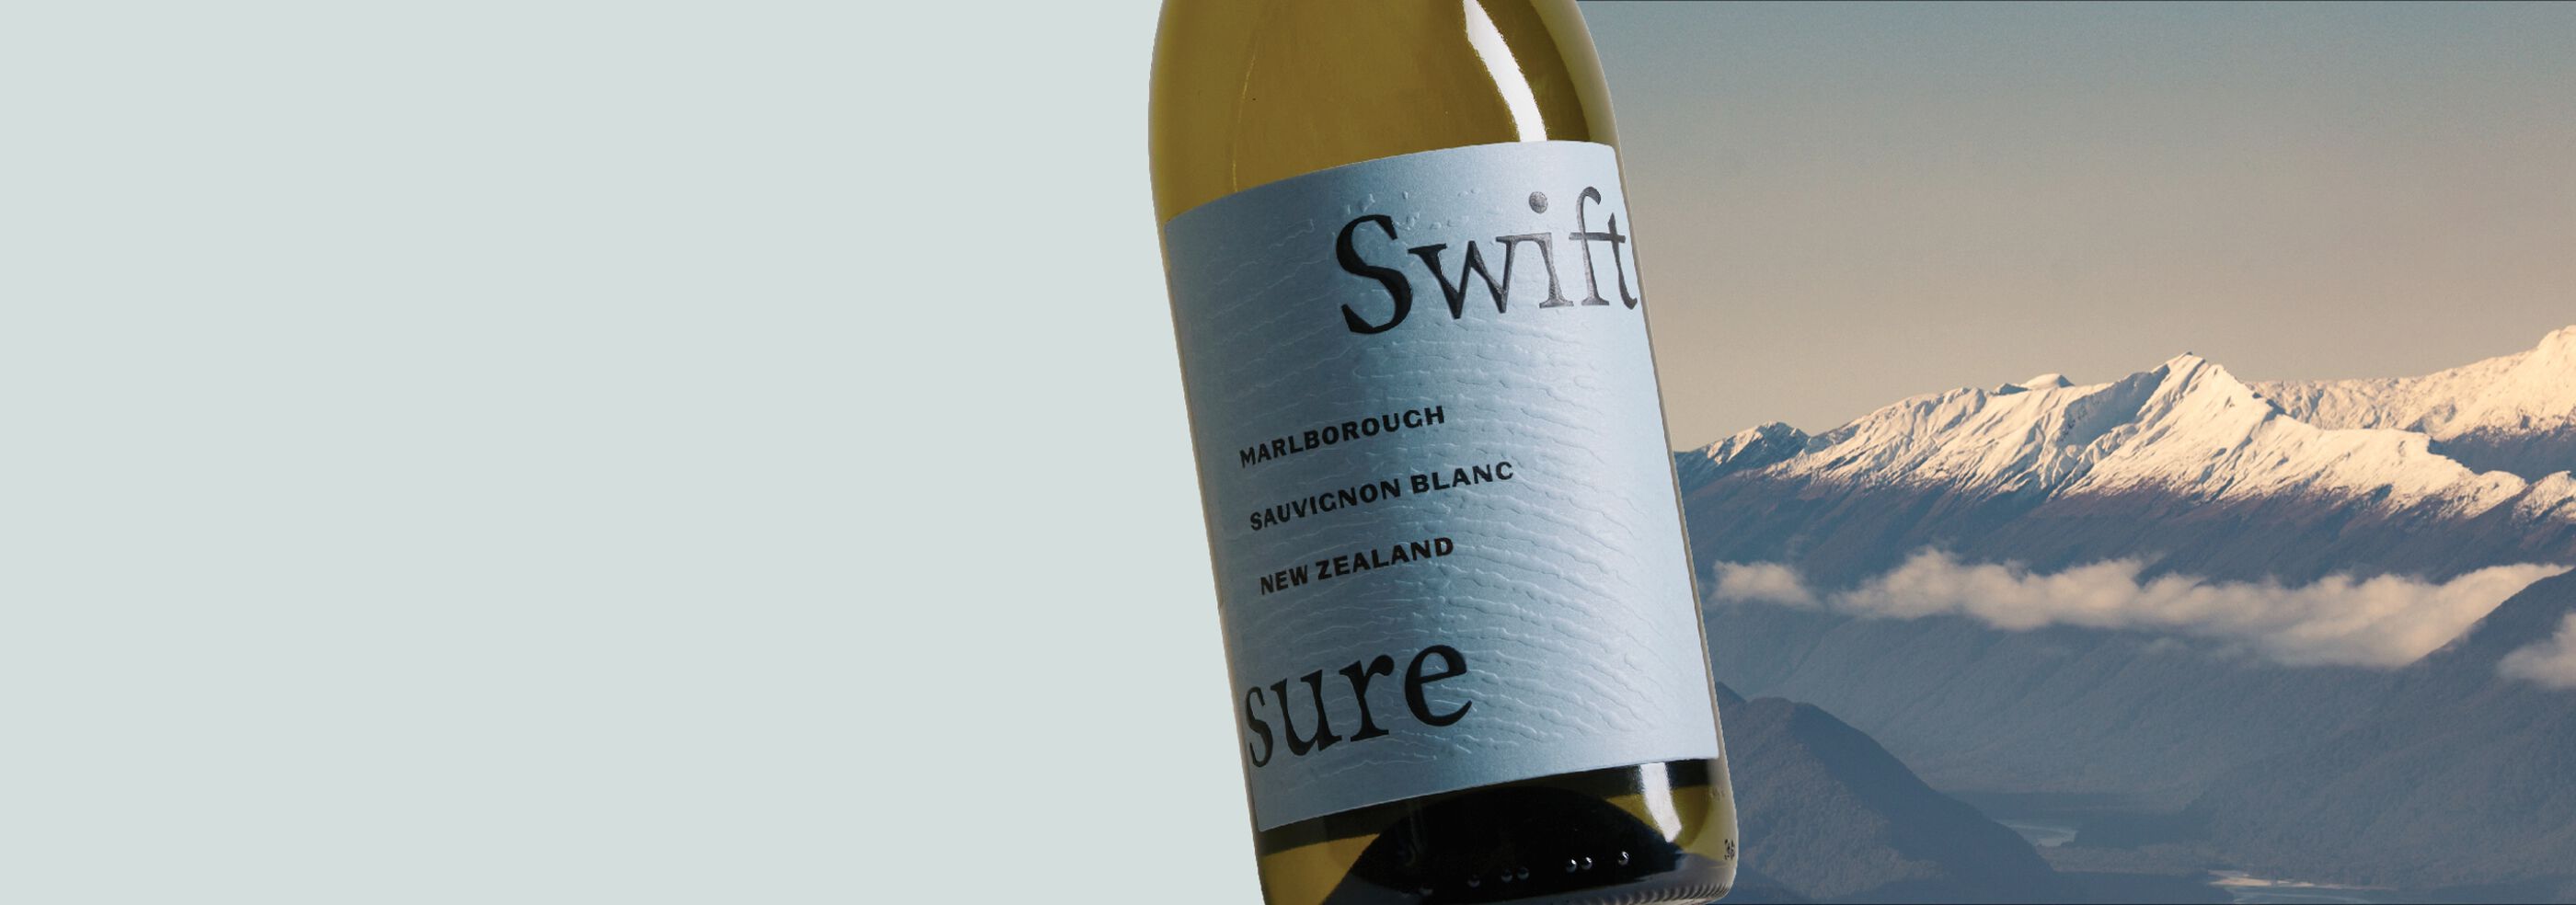 Swiftsure Sauvignon Blanc 